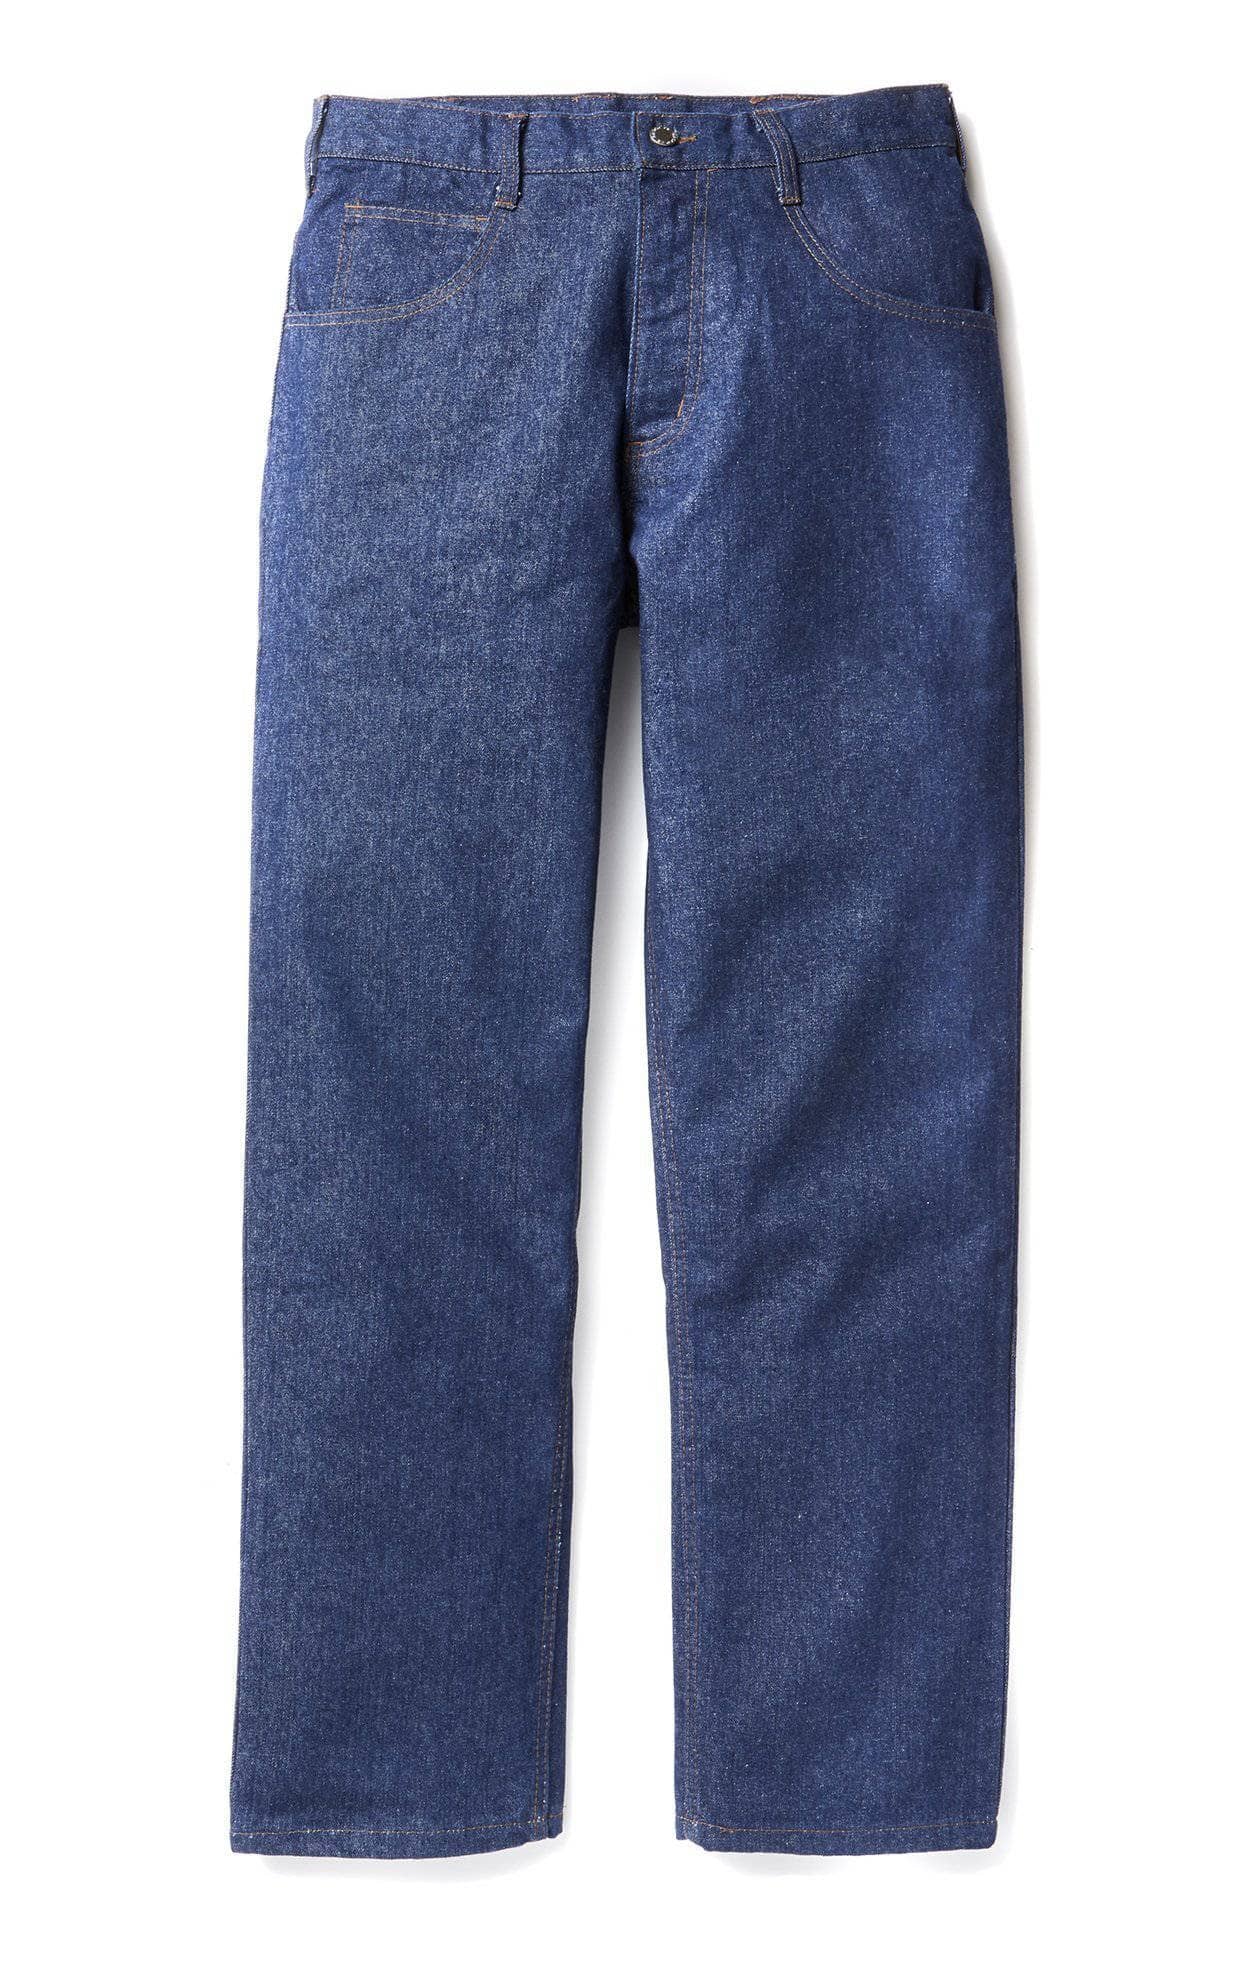 FR Classic Fit Jeans - Denim (CLOSEOUT) - Rasco FR